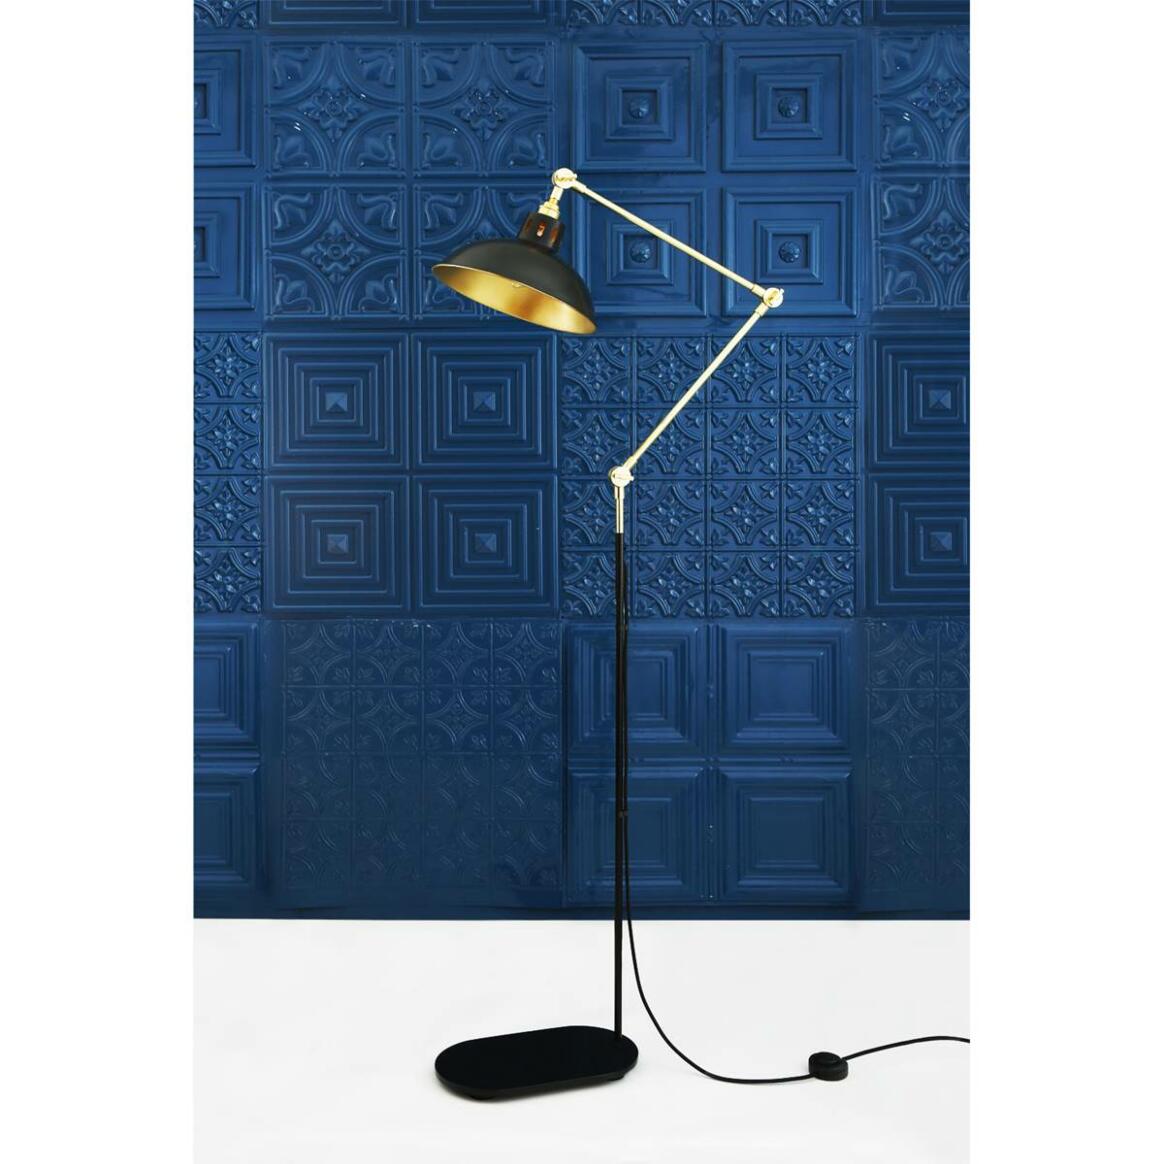 Faro Modern Industrial Brass Floor Lamp